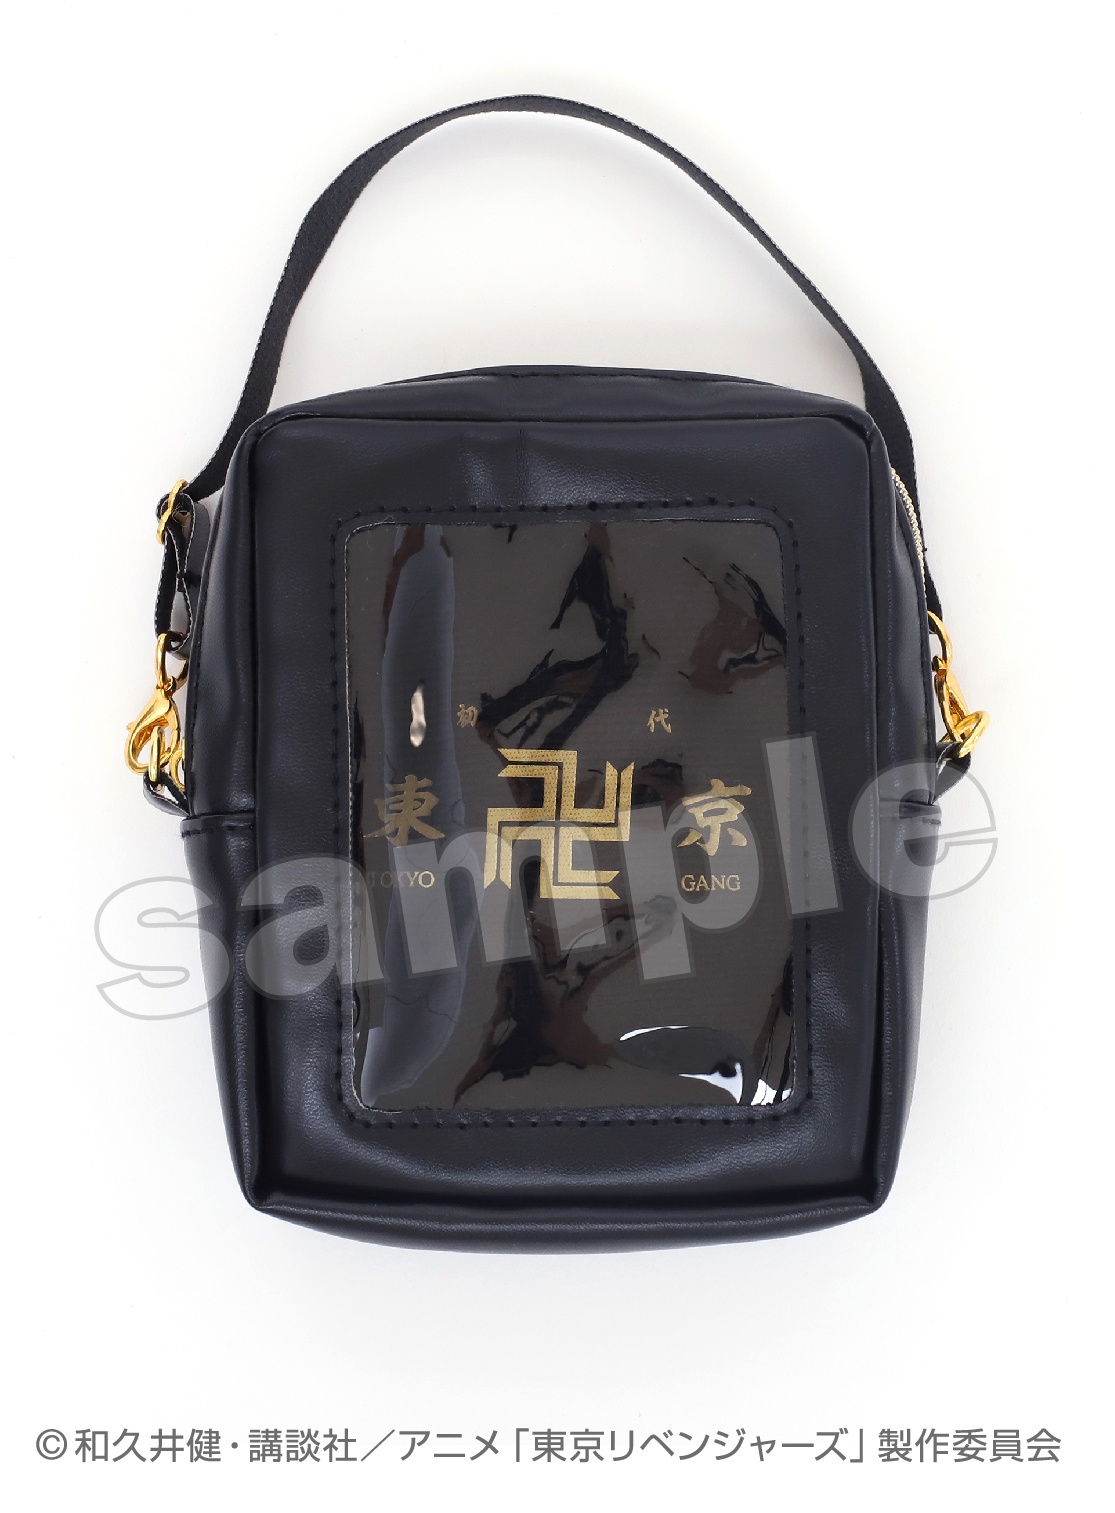 Veta Megica Ps4 Playstation Backpack Sports Leisure Travel Bag 